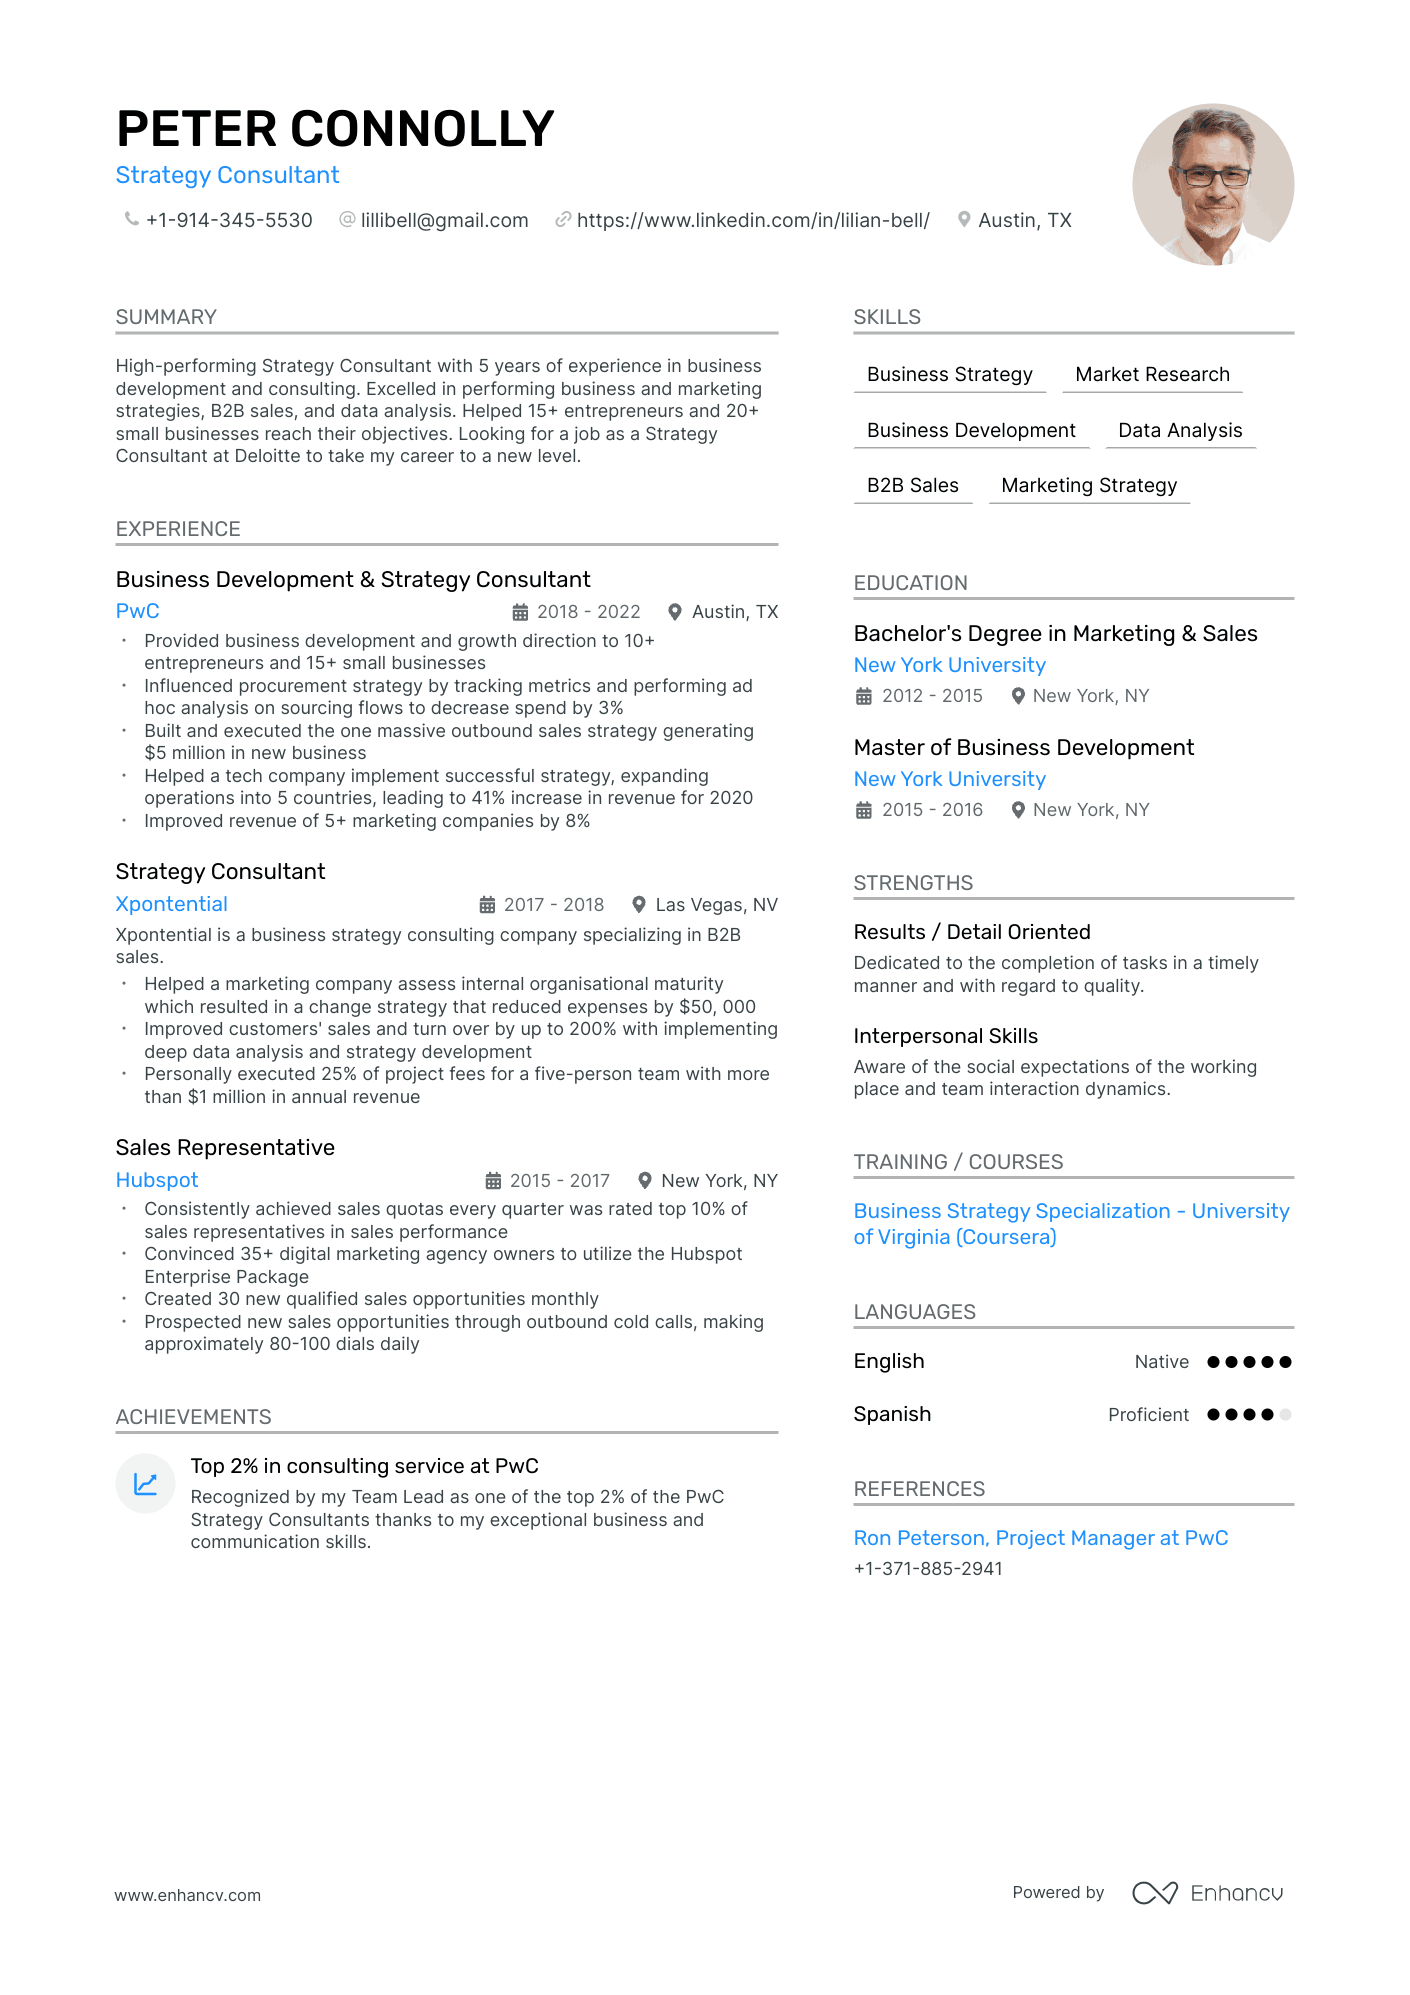 Deloitte resume example